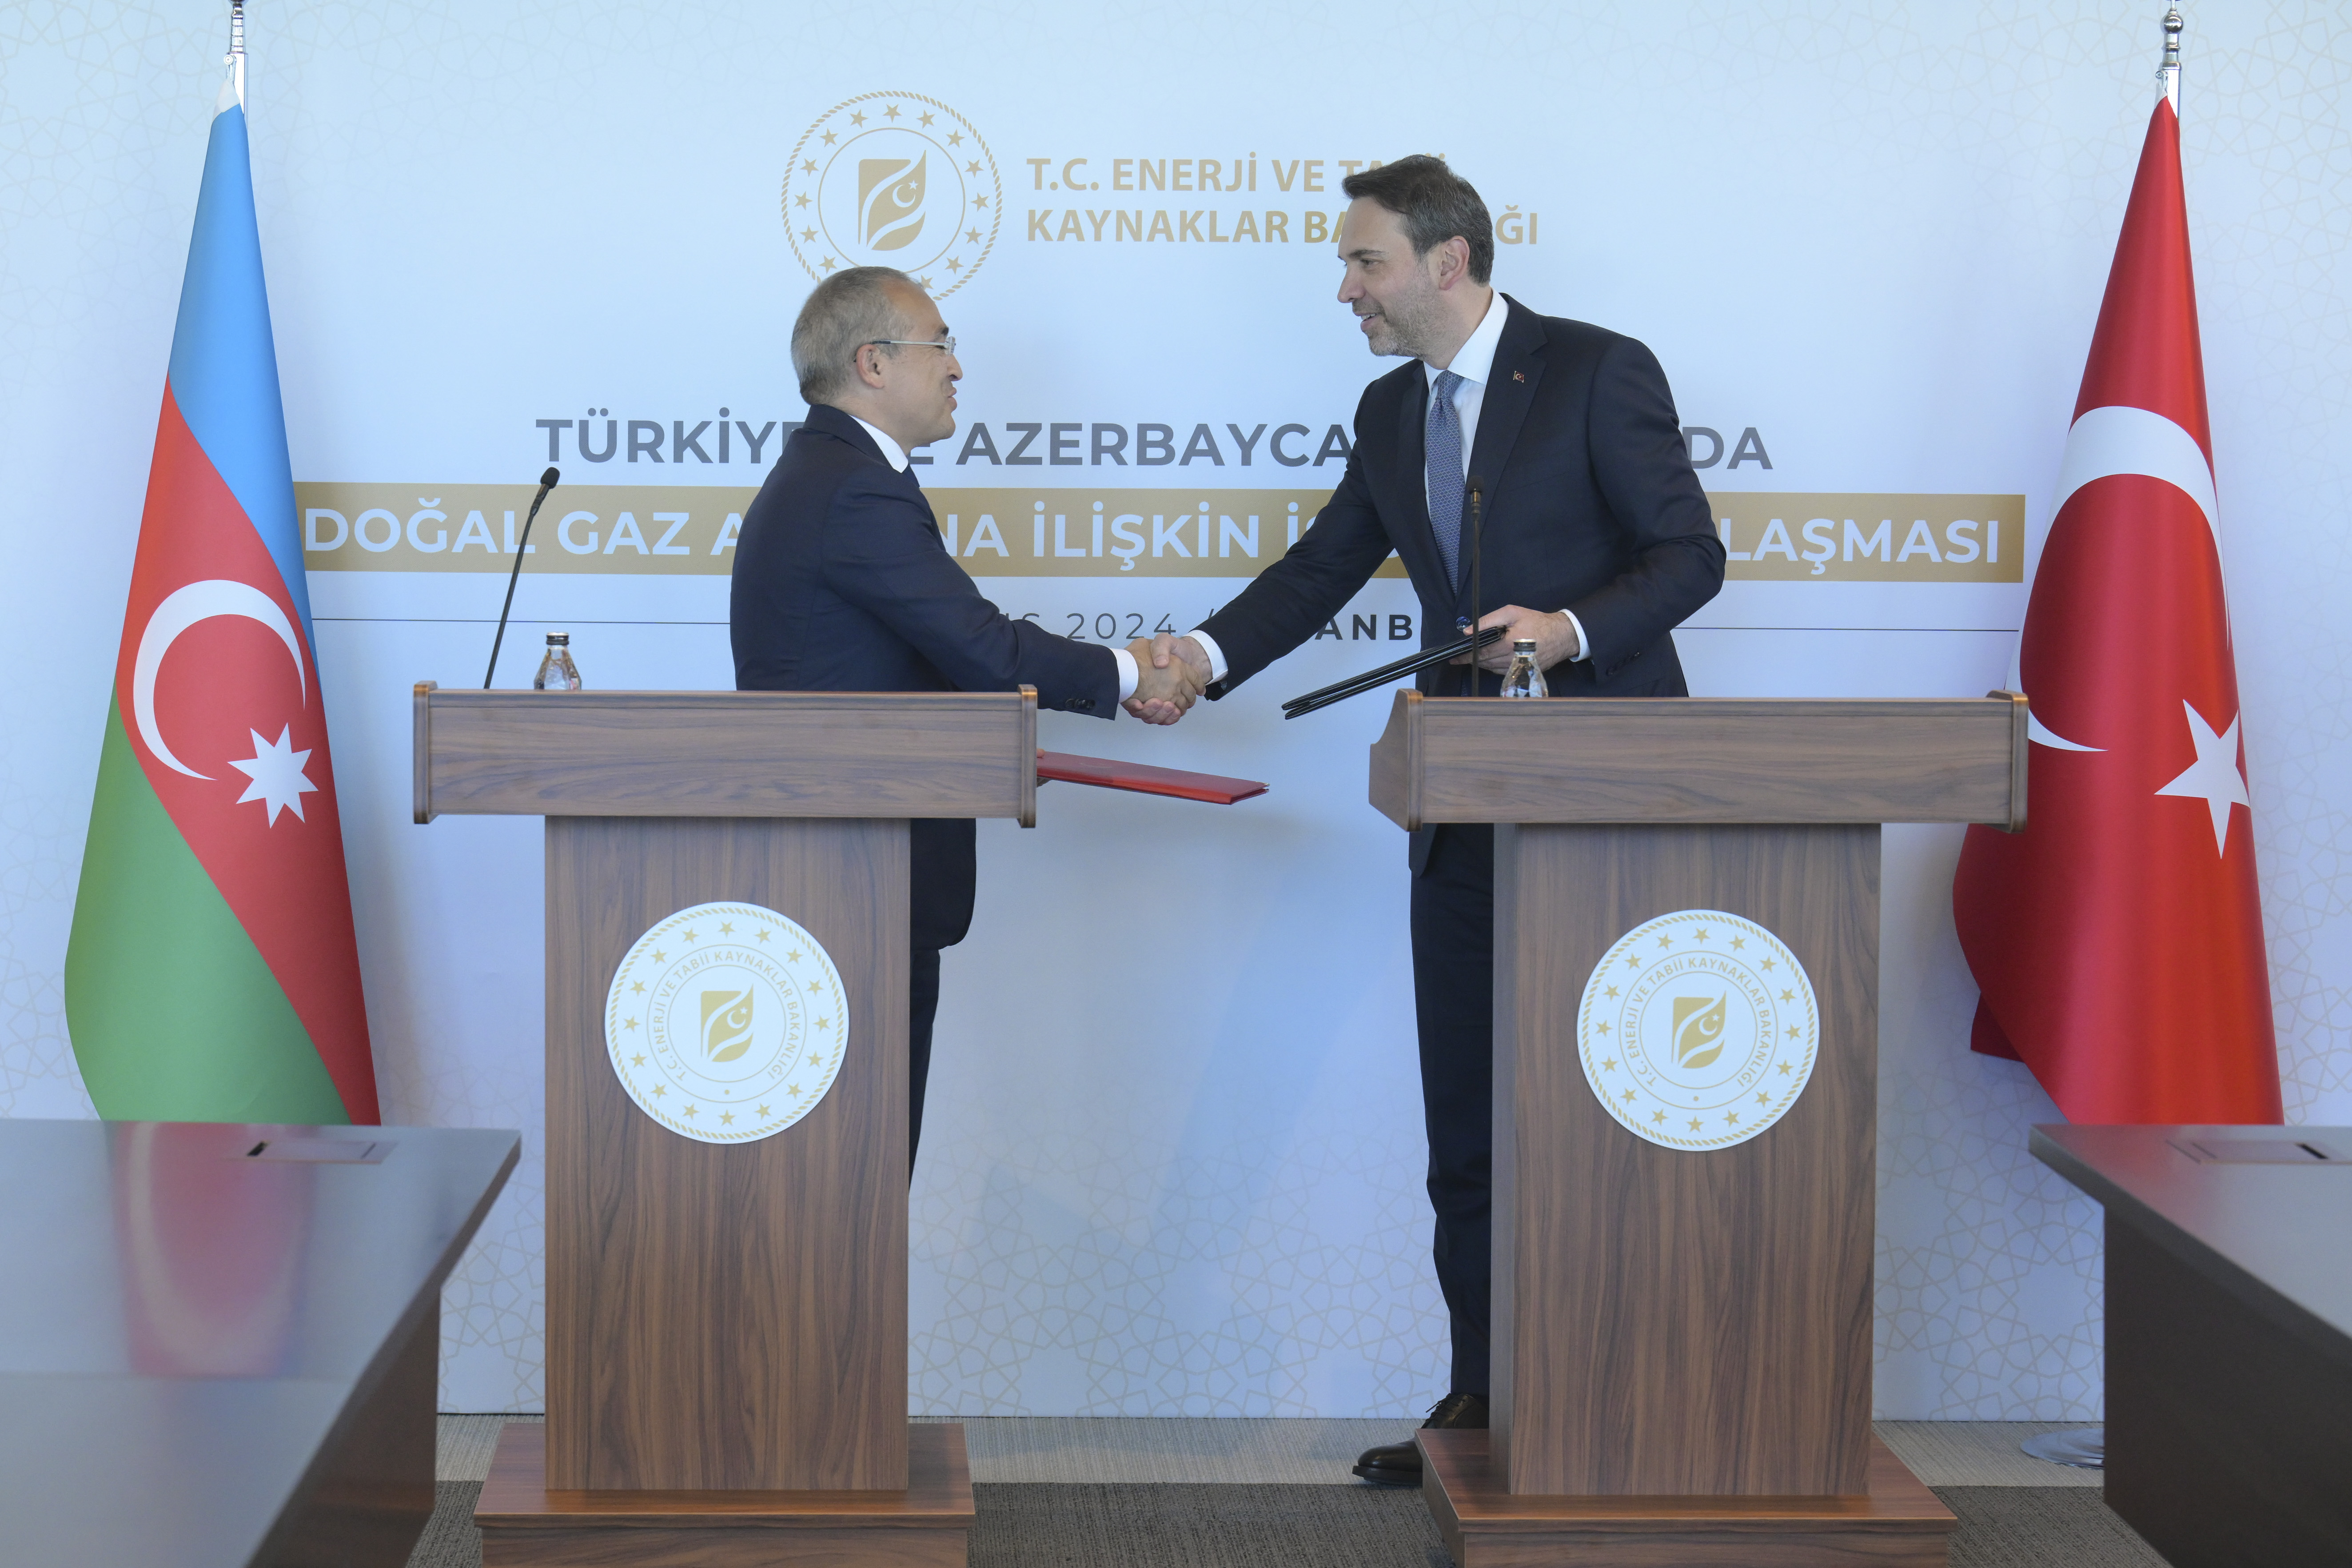 Türkiye, Azerbaijan strengthen natural gas cooperation with new agreement